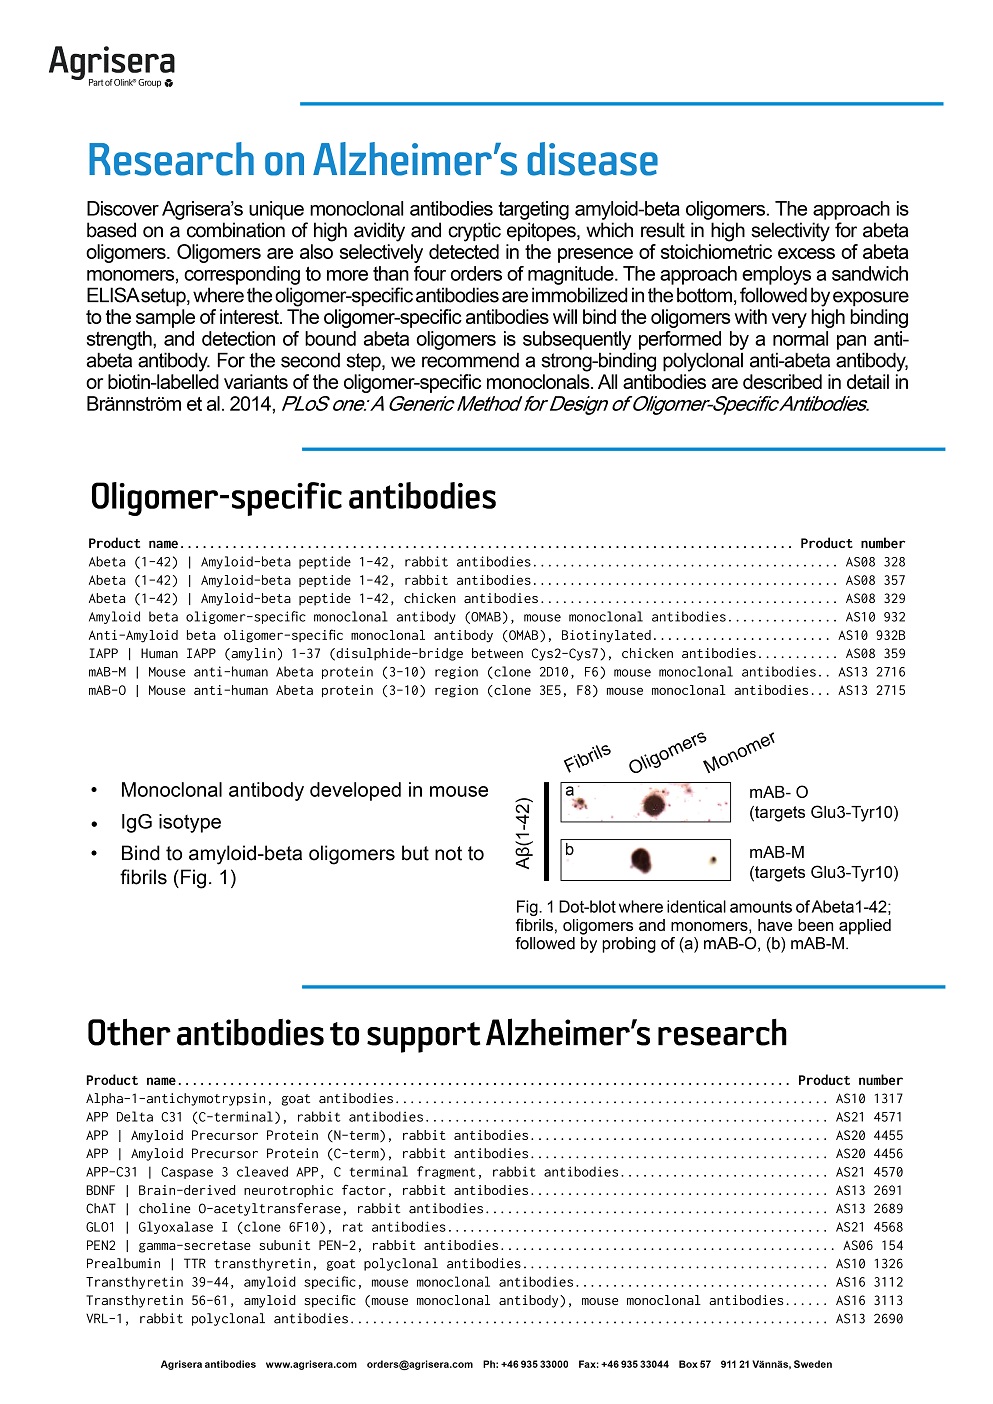 Agrisera Alzheimer's research antibodies